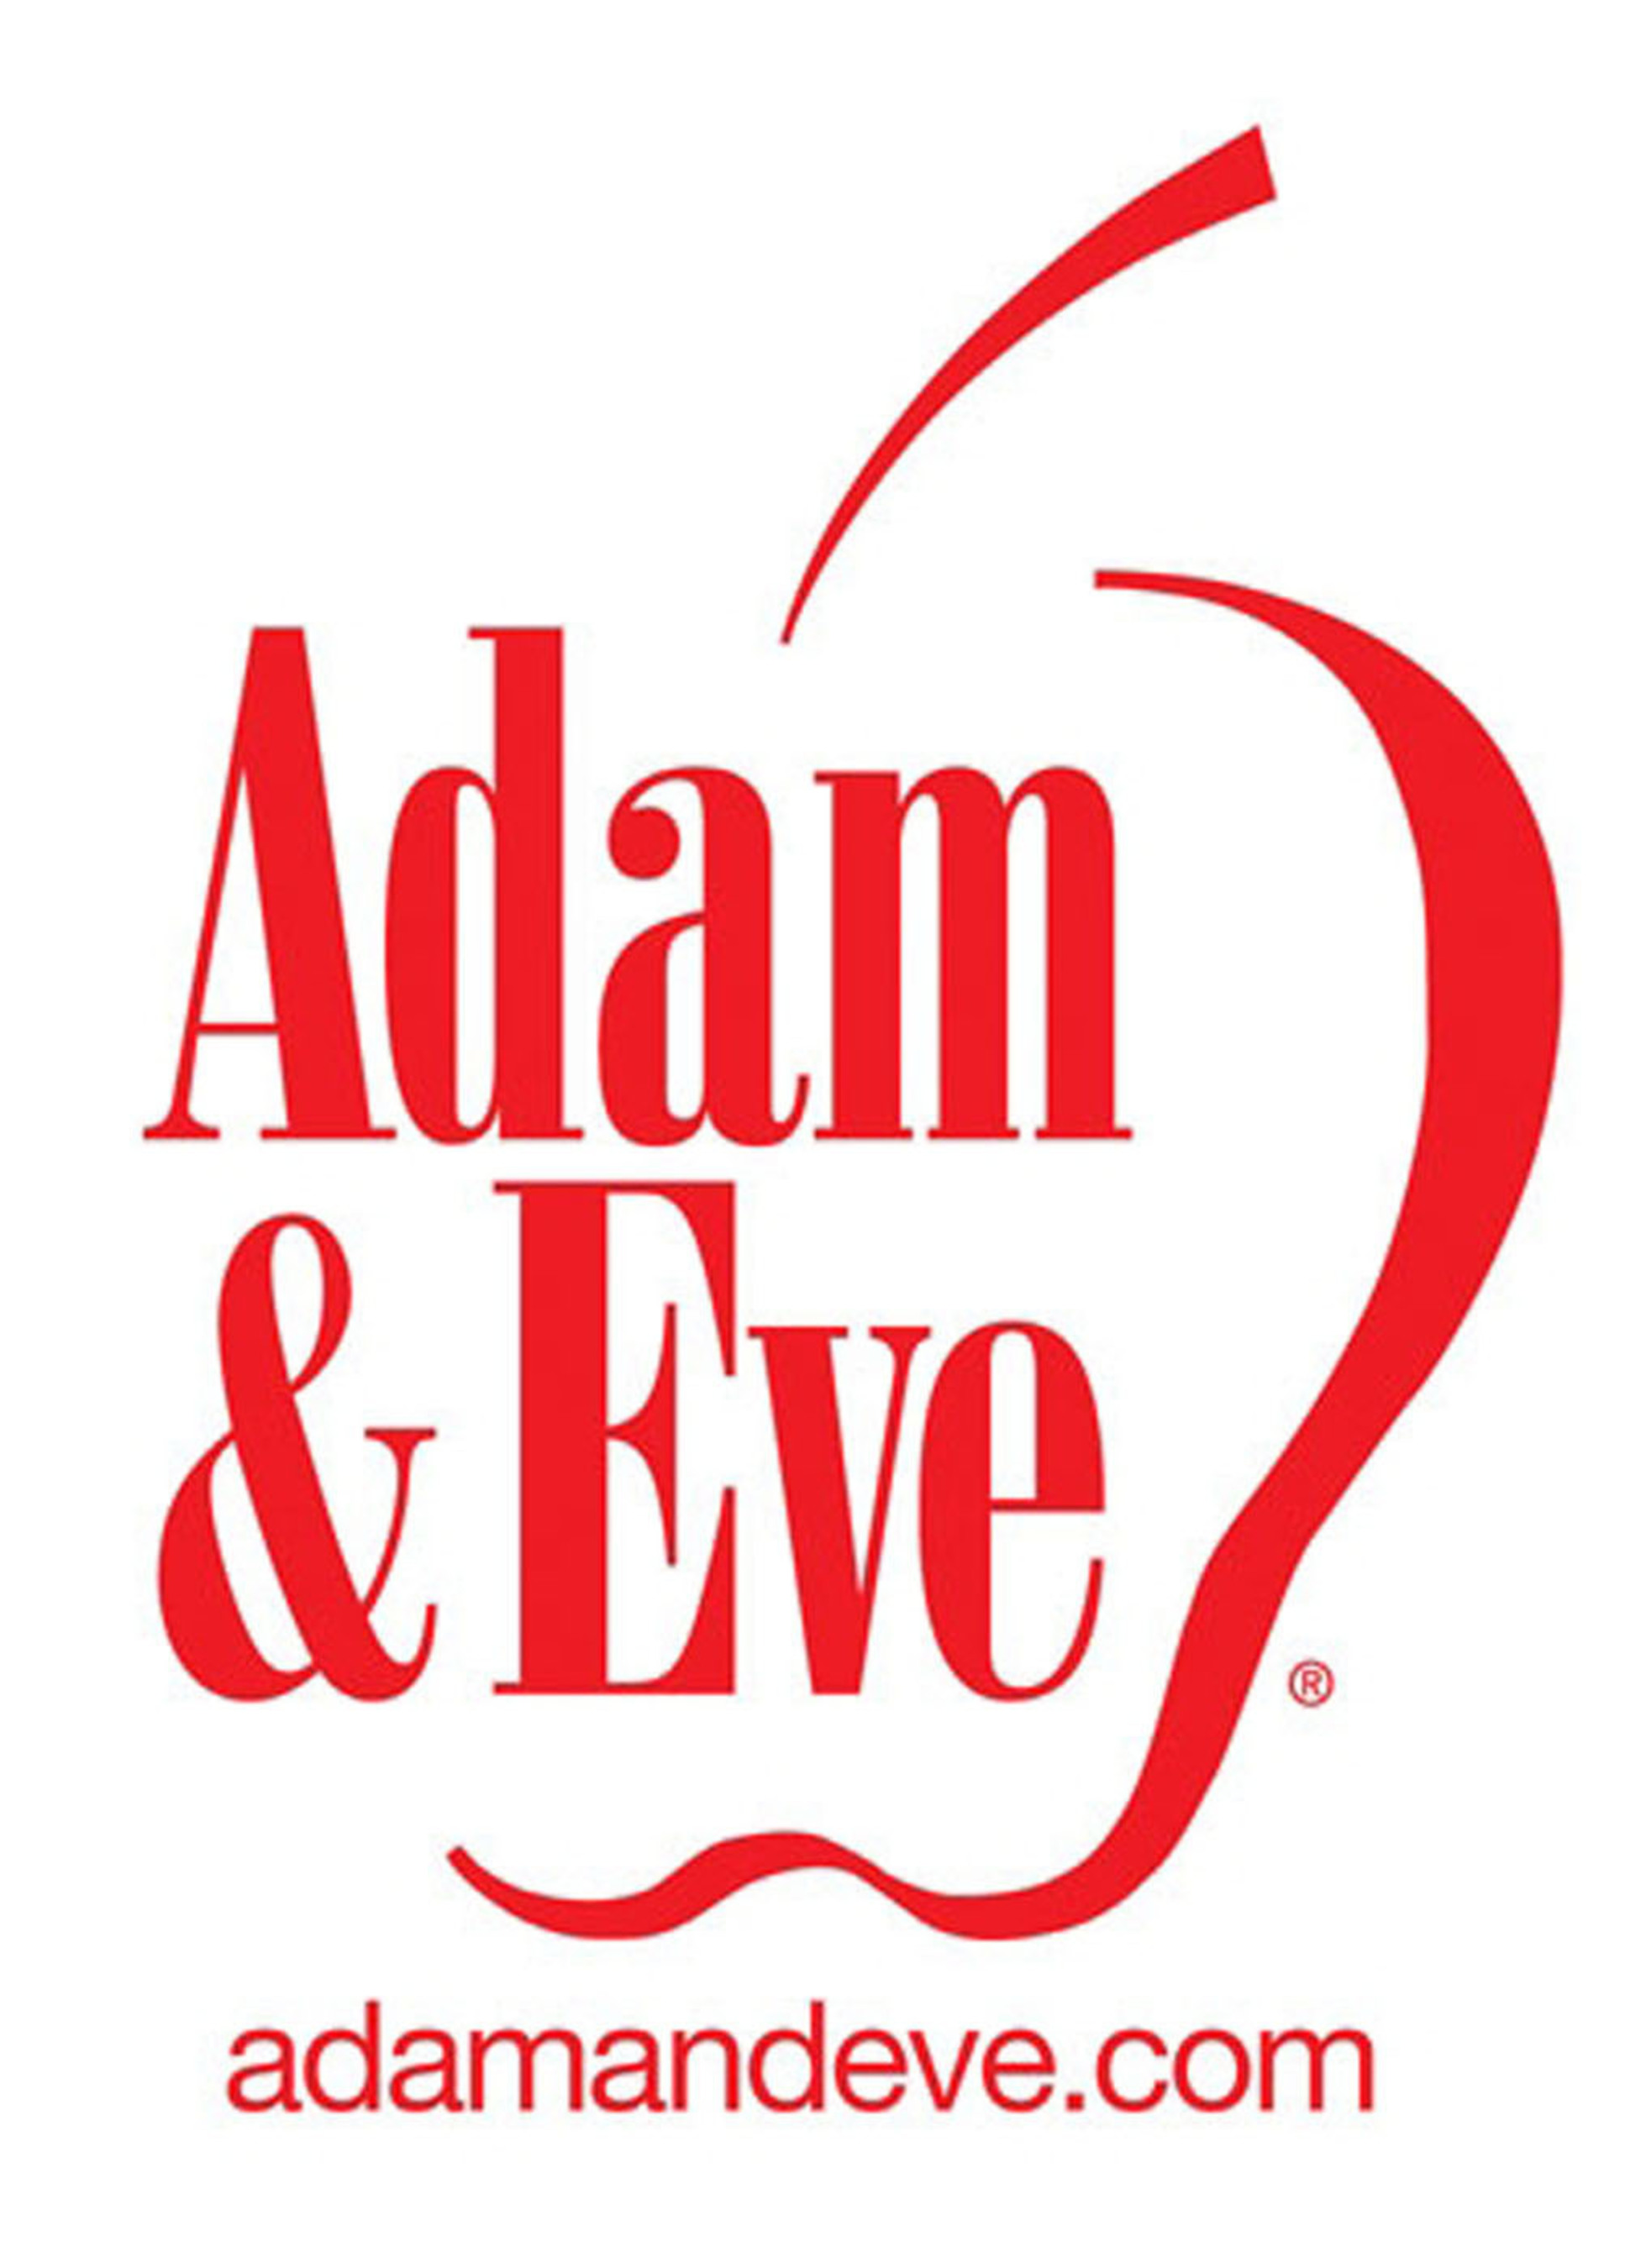 Adam & Eve LOGO. (PRNewsFoto/Adam & Eve) (PRNewsFoto/)